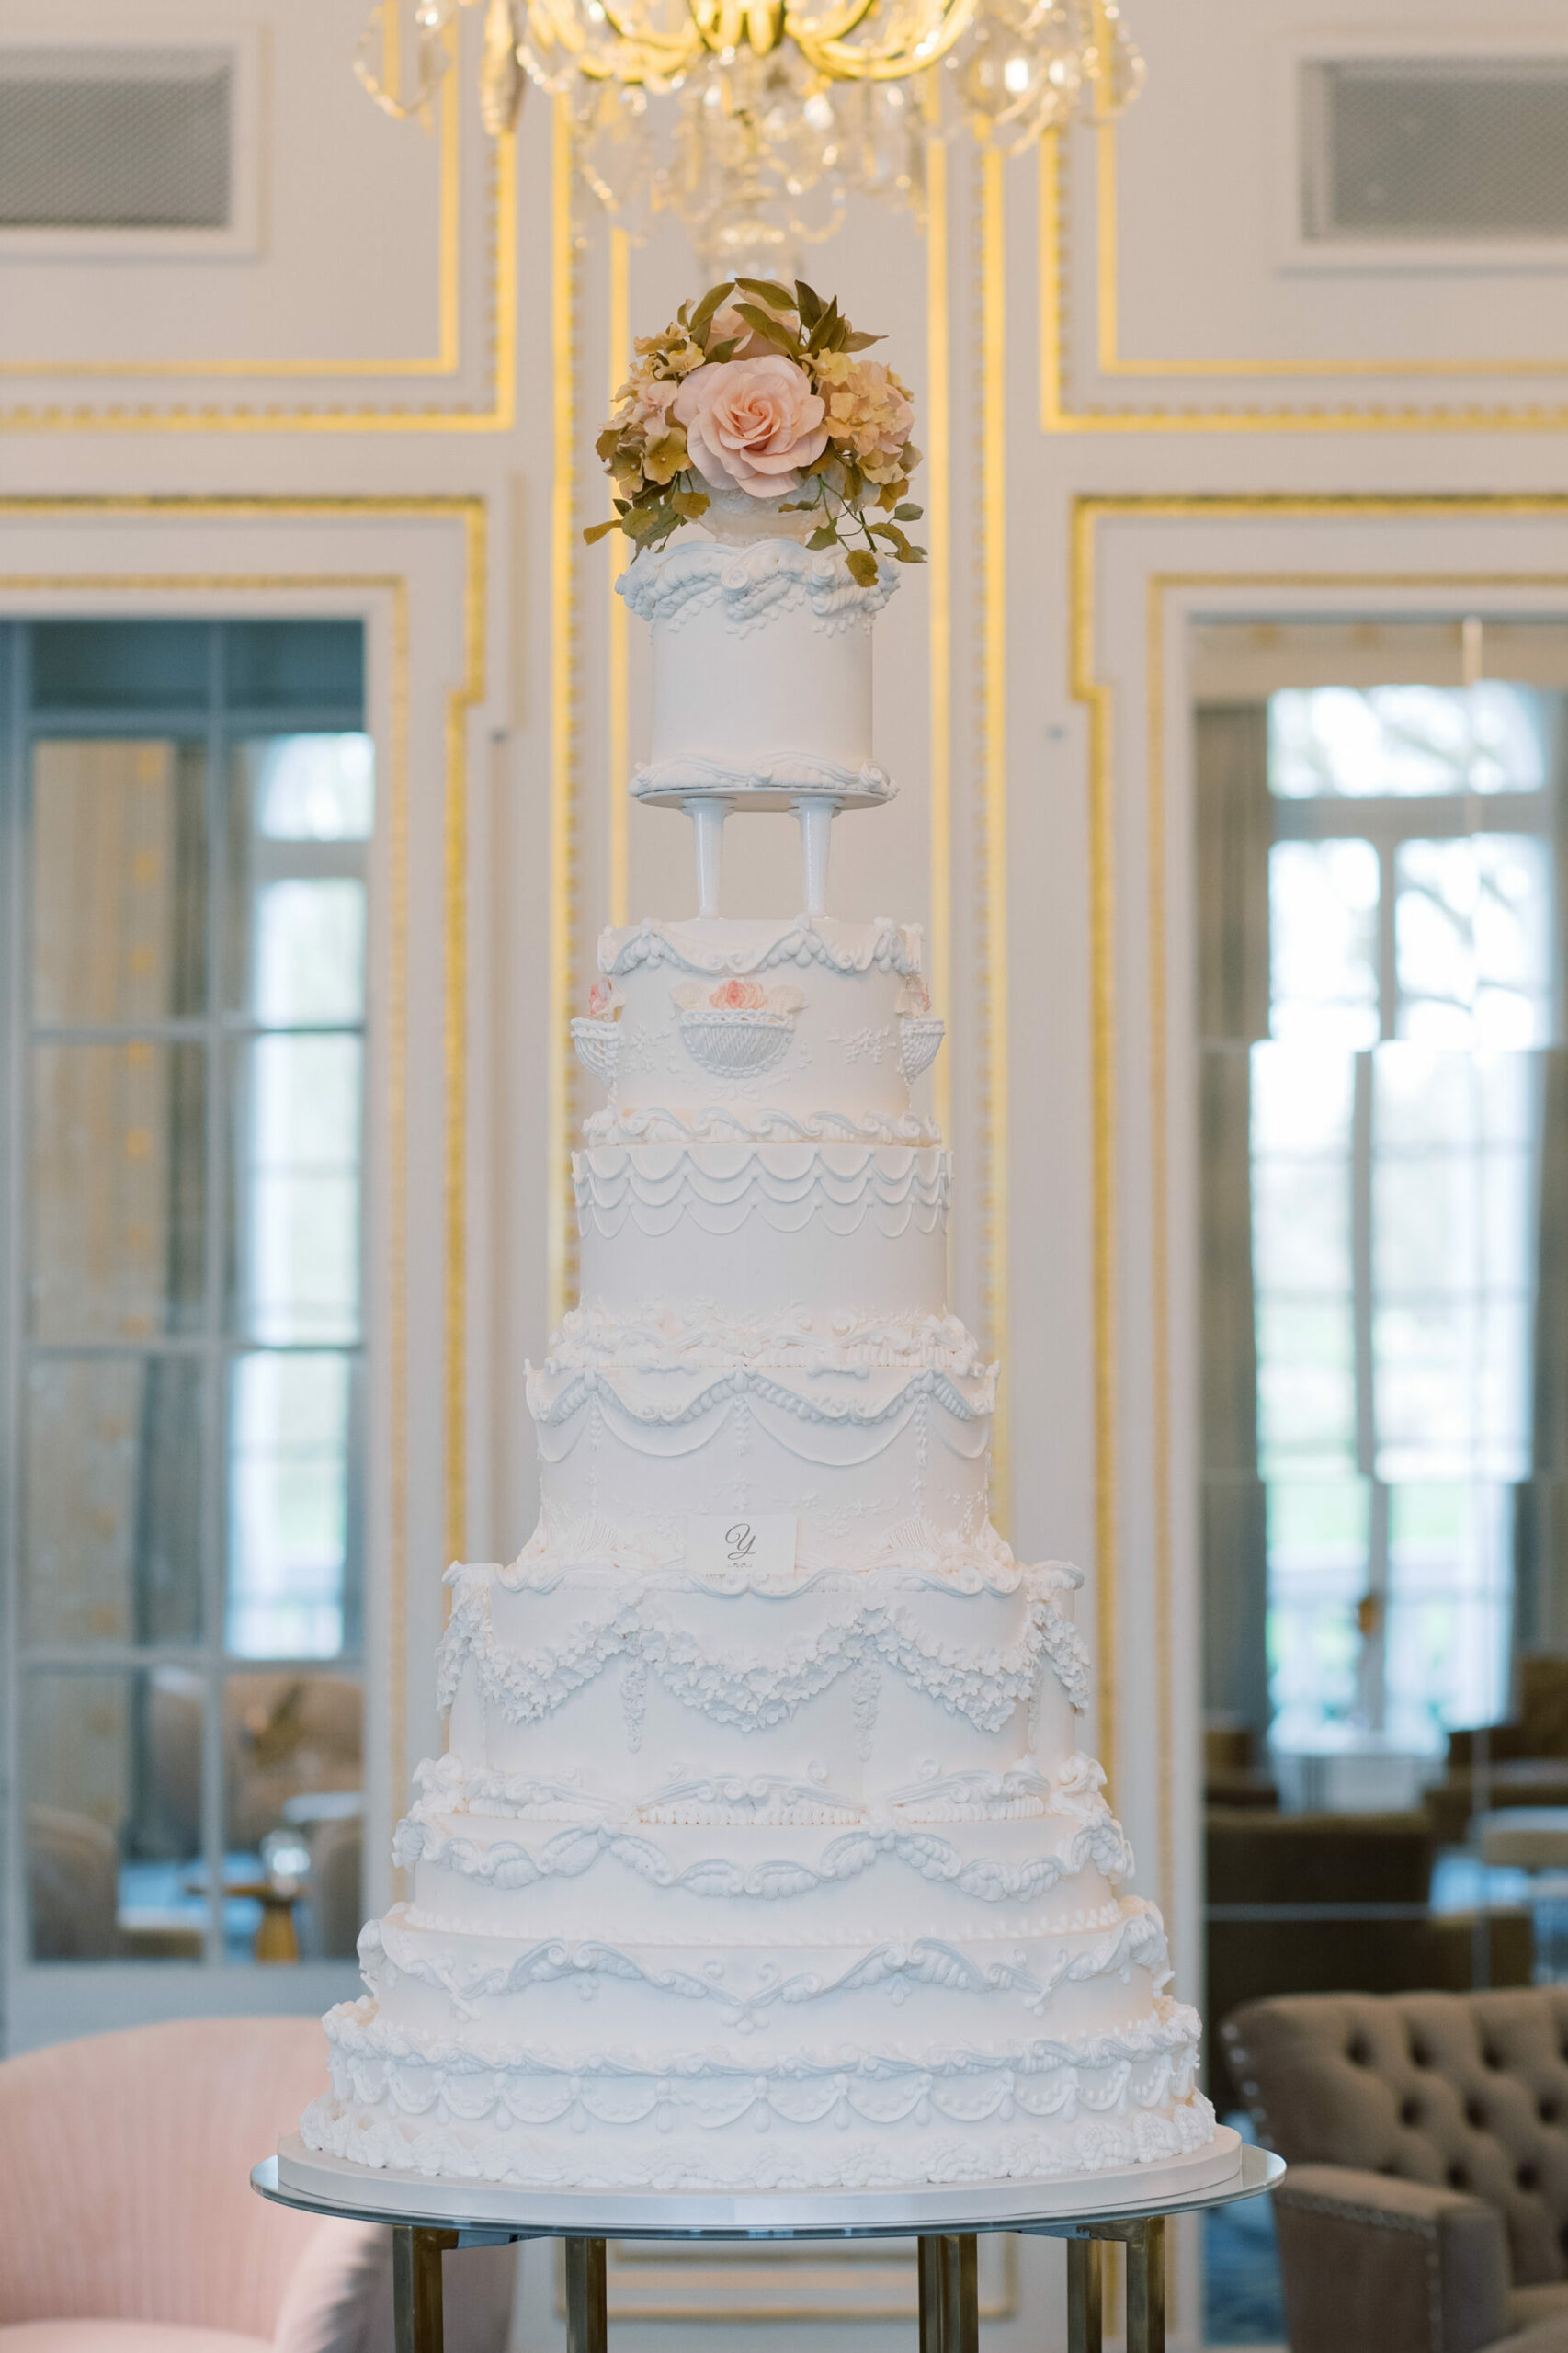 Statement luxury ivory wedding cake By Yevnig in the ballroom of the Mandarin Oriental, Hyde Park